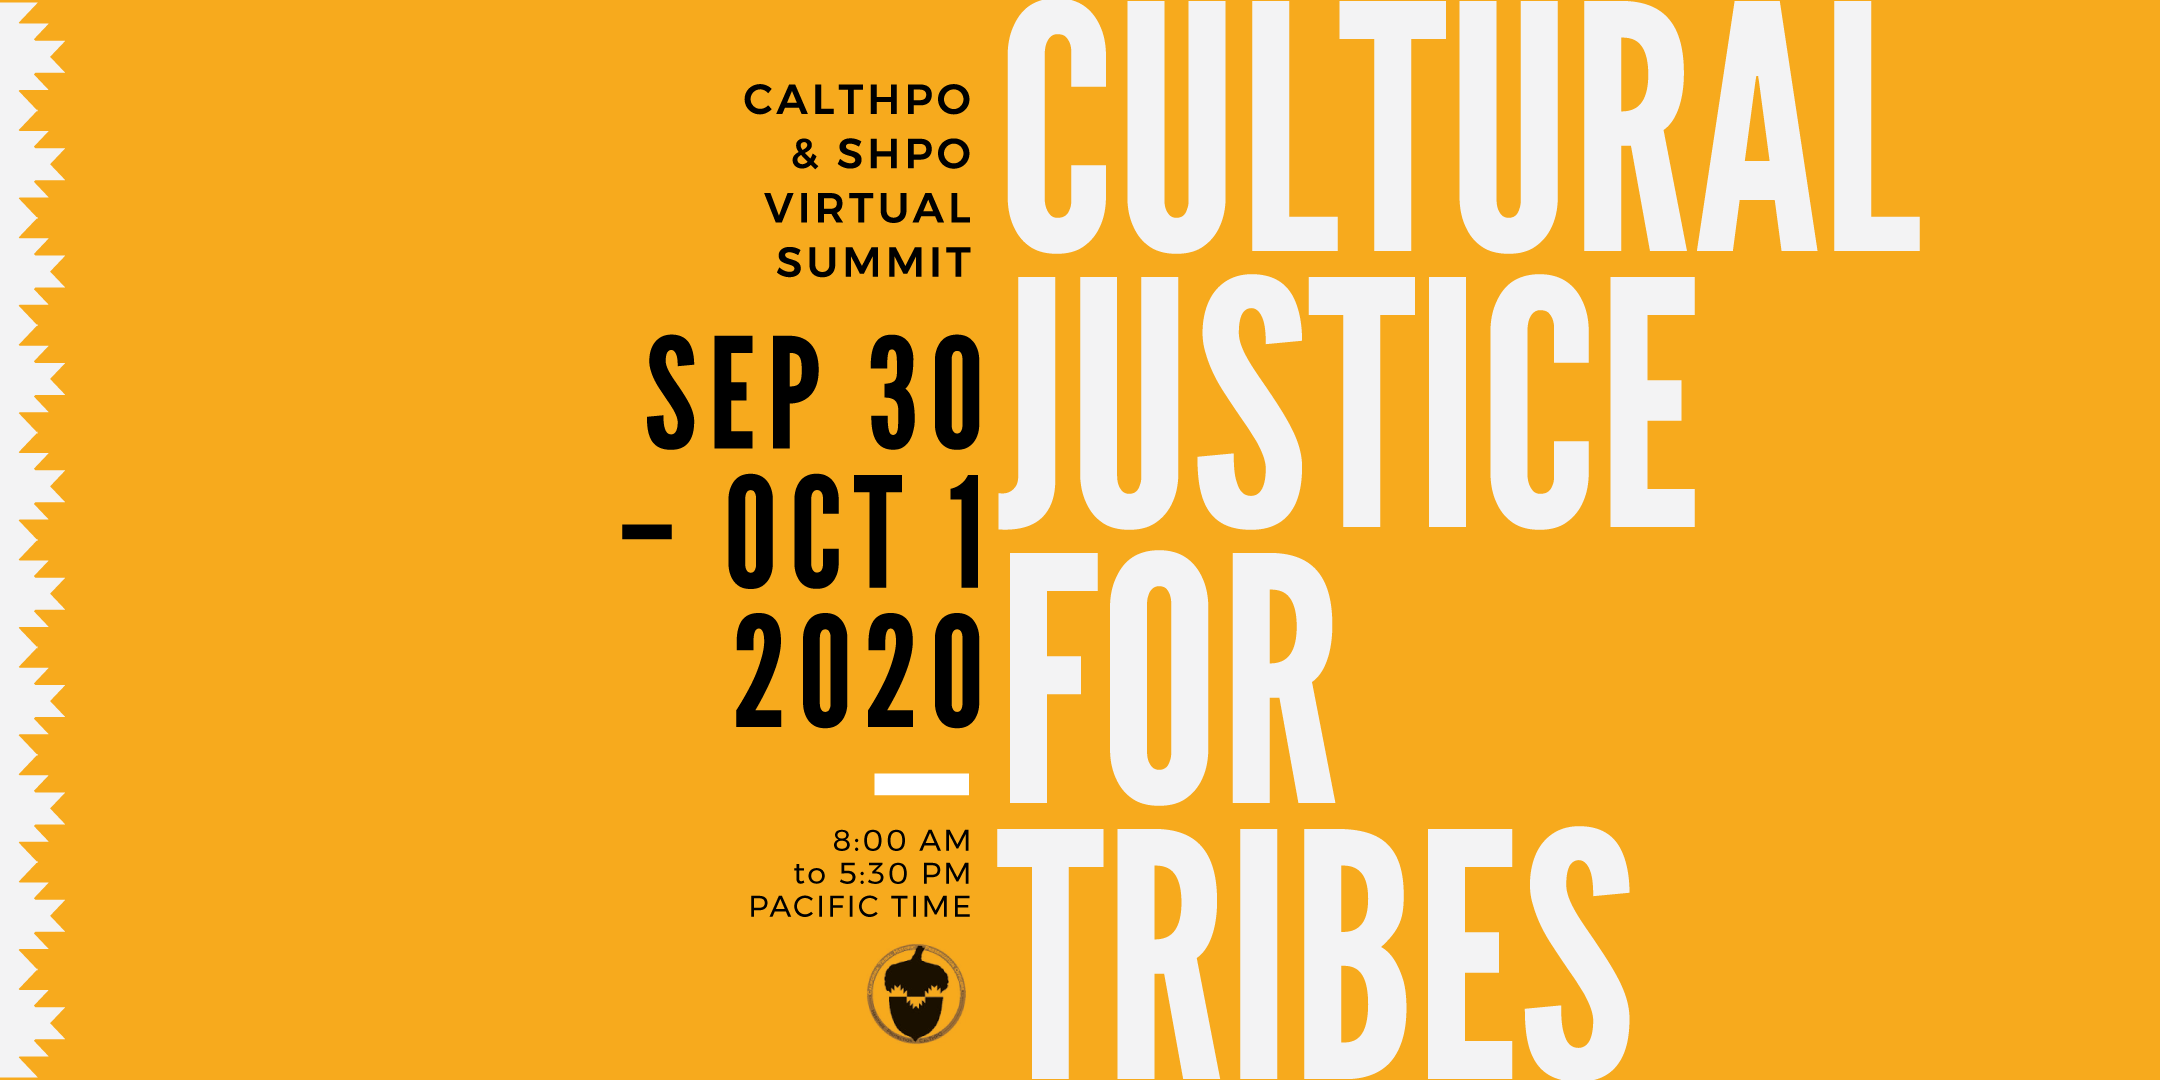 Pala Band California PED Environment CalTHPO Virtual Summit Cultural Justice for Tribes